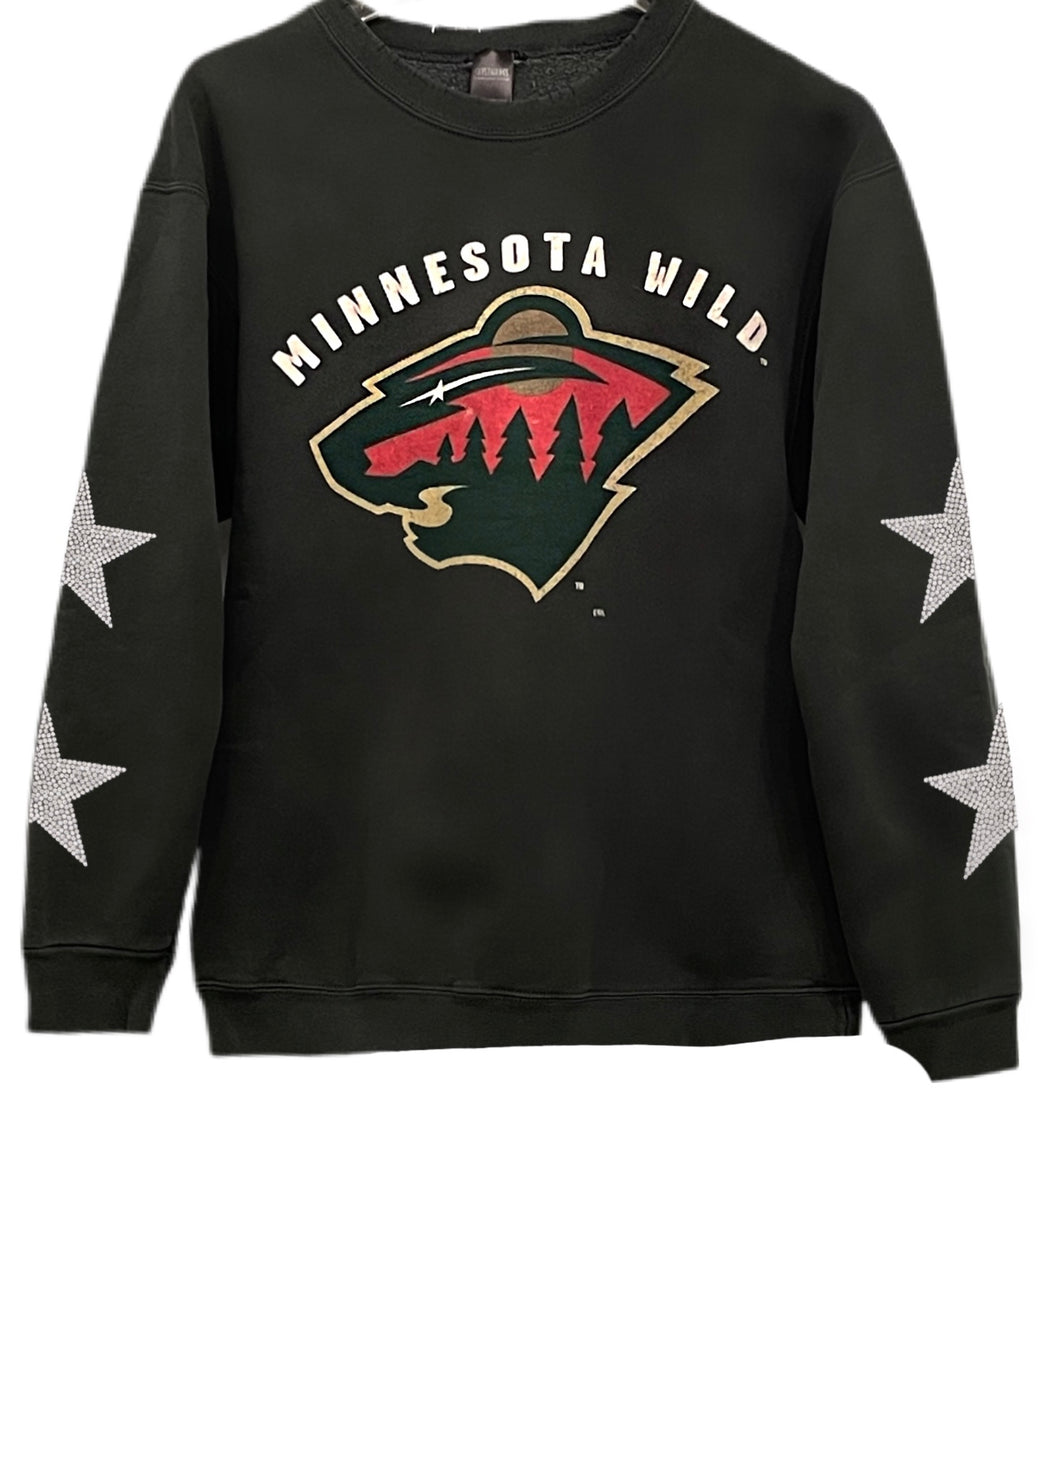 Minnesota Wild, NHL One of a KIND Vintage Sweatshirt with Crystal Star Design